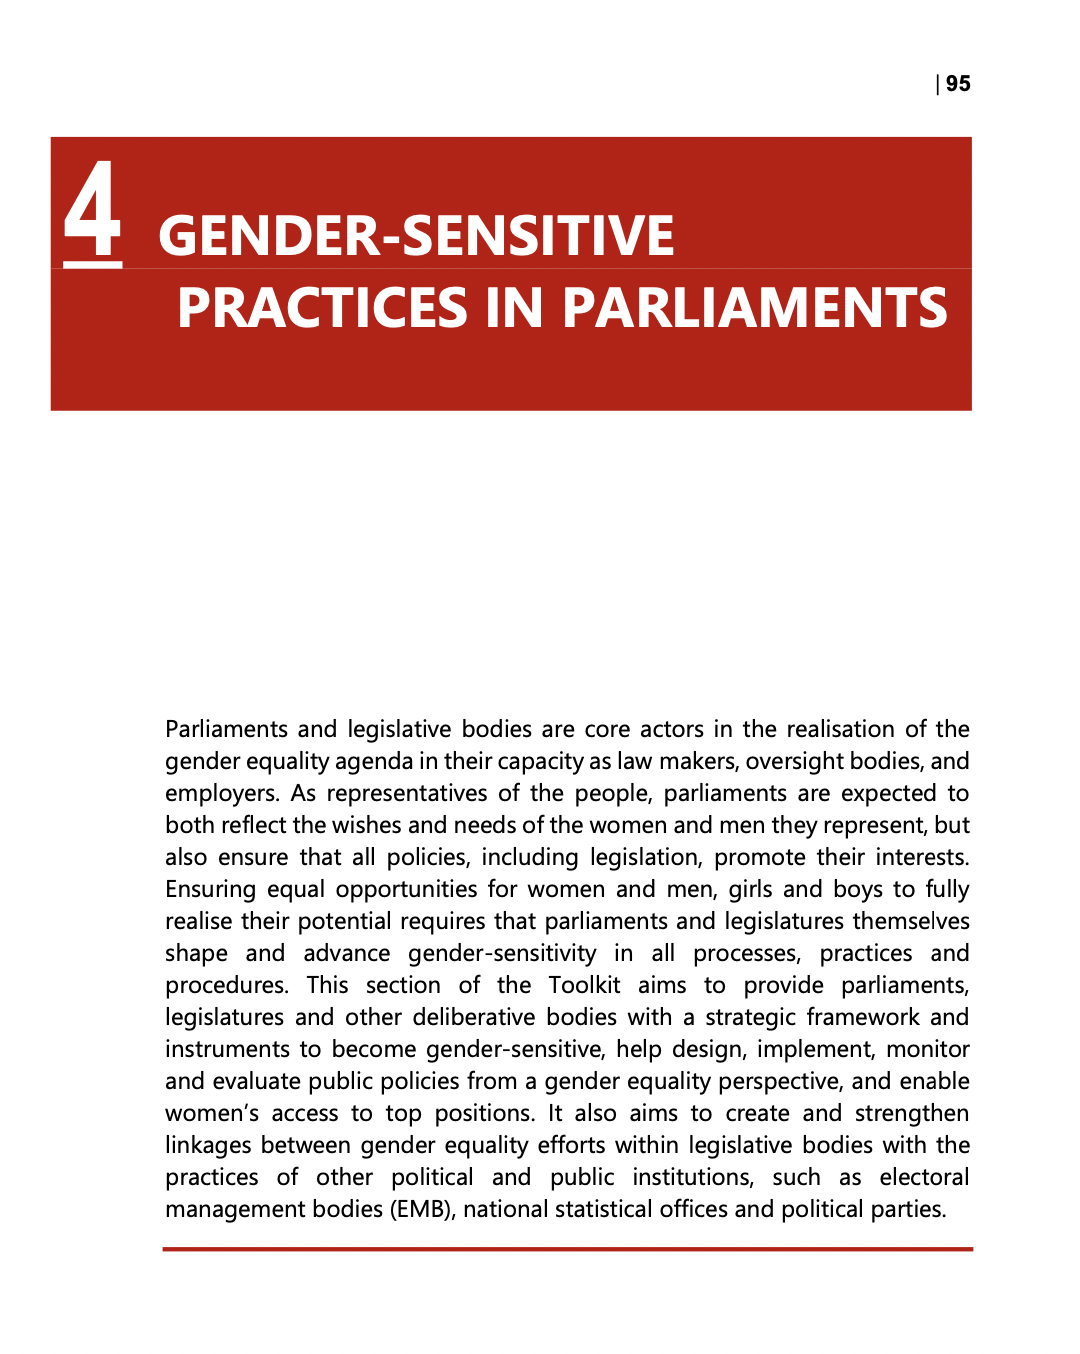 Gender-sensitive practices in parliaments